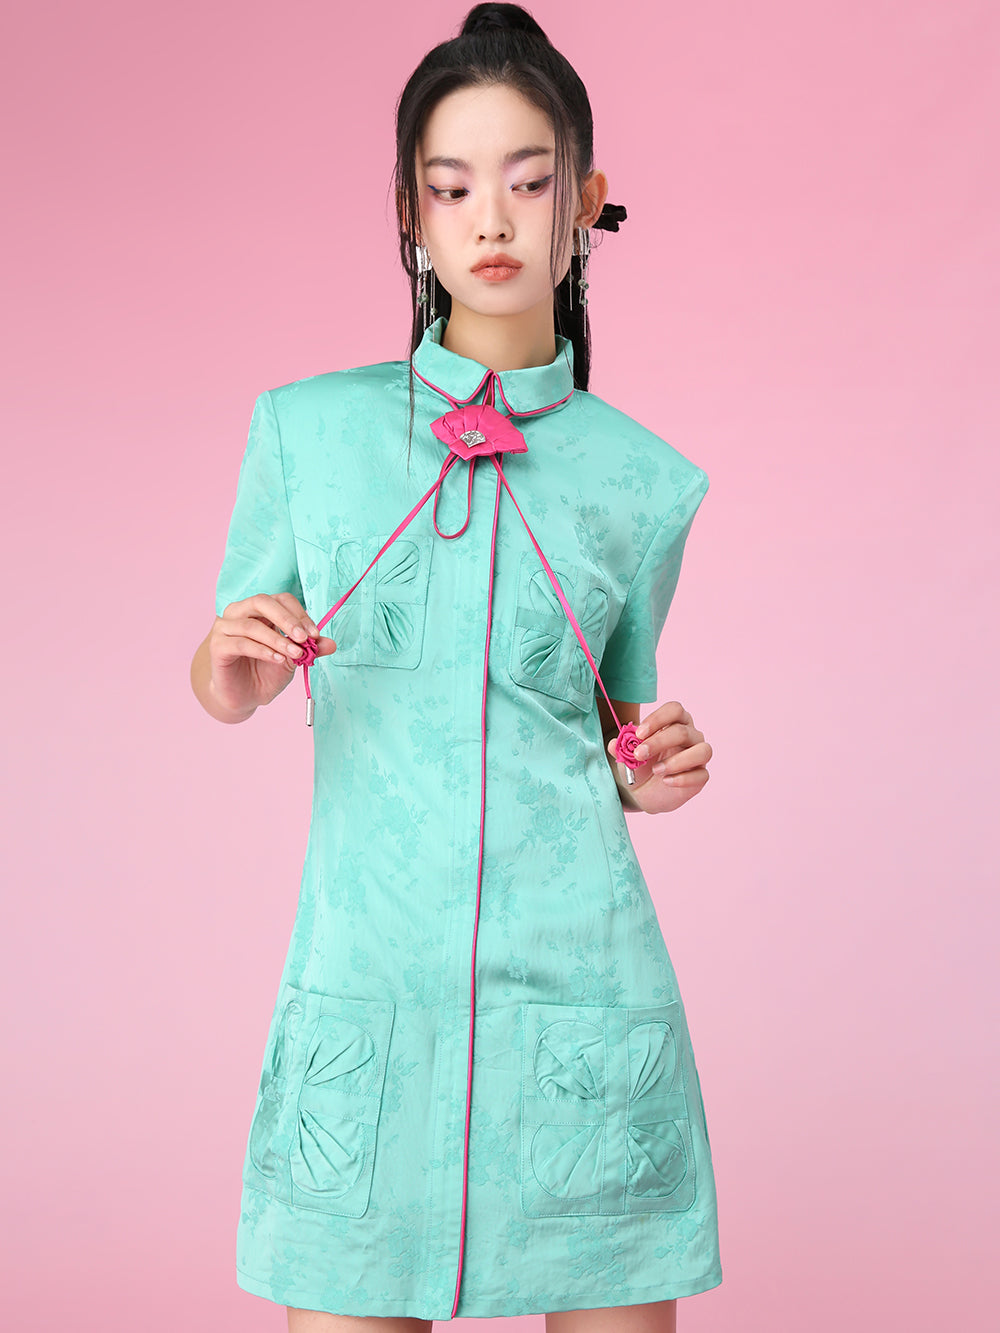 MUKZIN Cheongsam New Green Slim Dress Charming